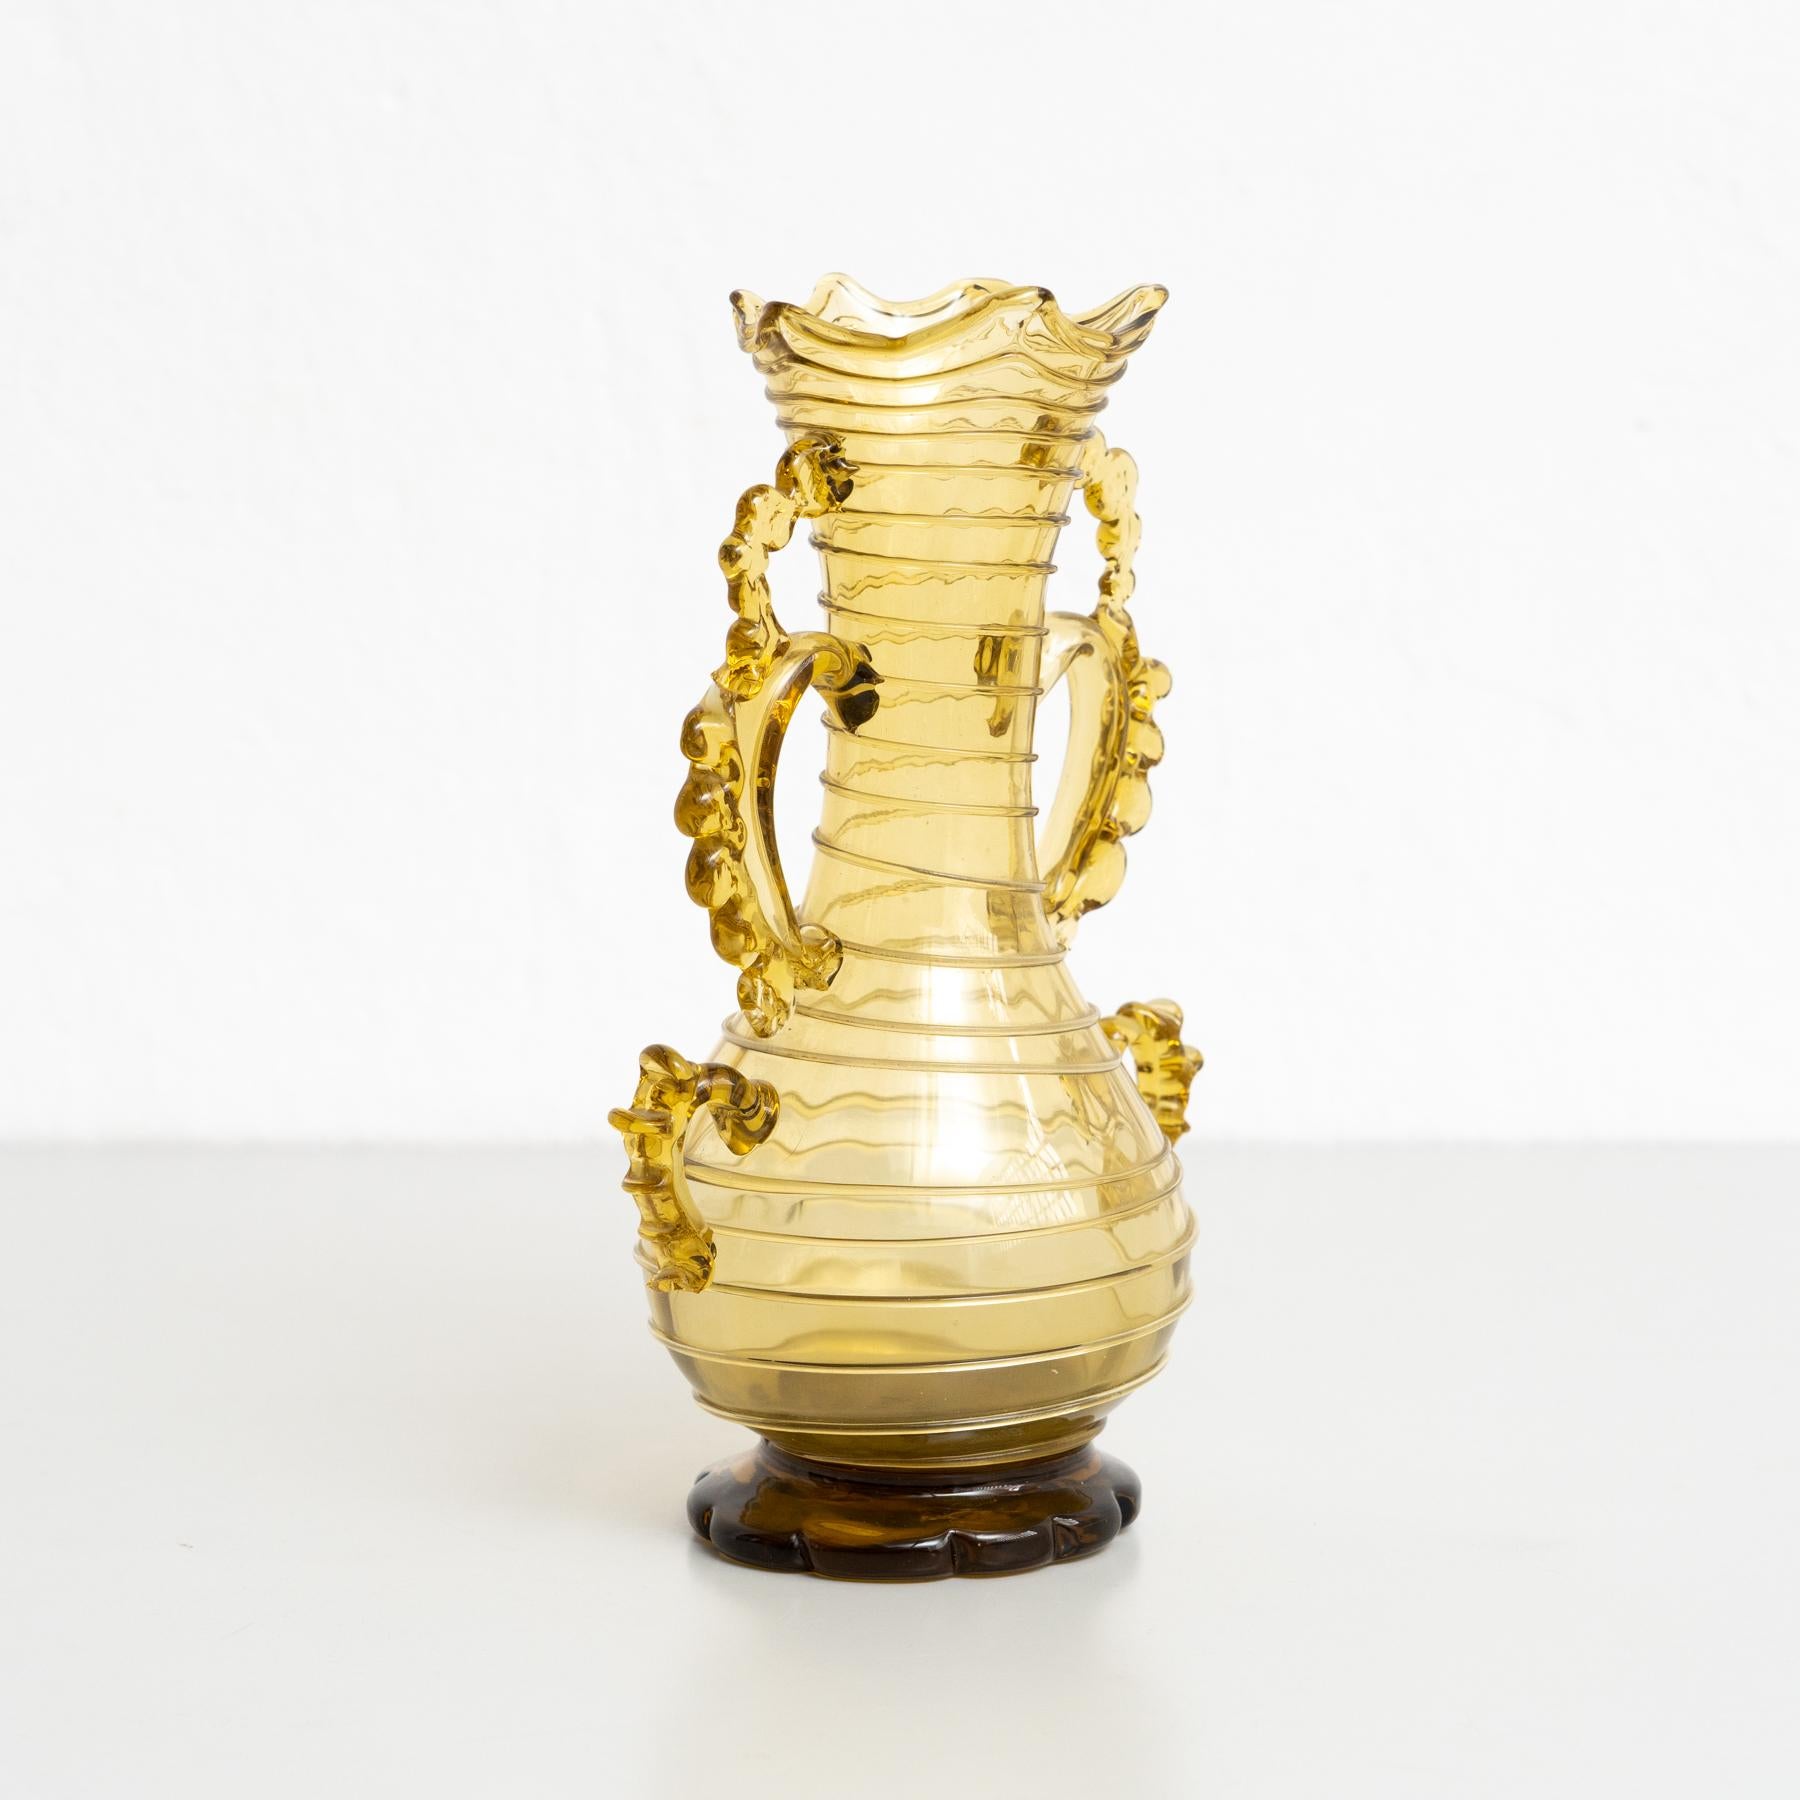 Elegant Amber Blown Glass Vase - Early 20th Century Spanish Artistry For Sale 2